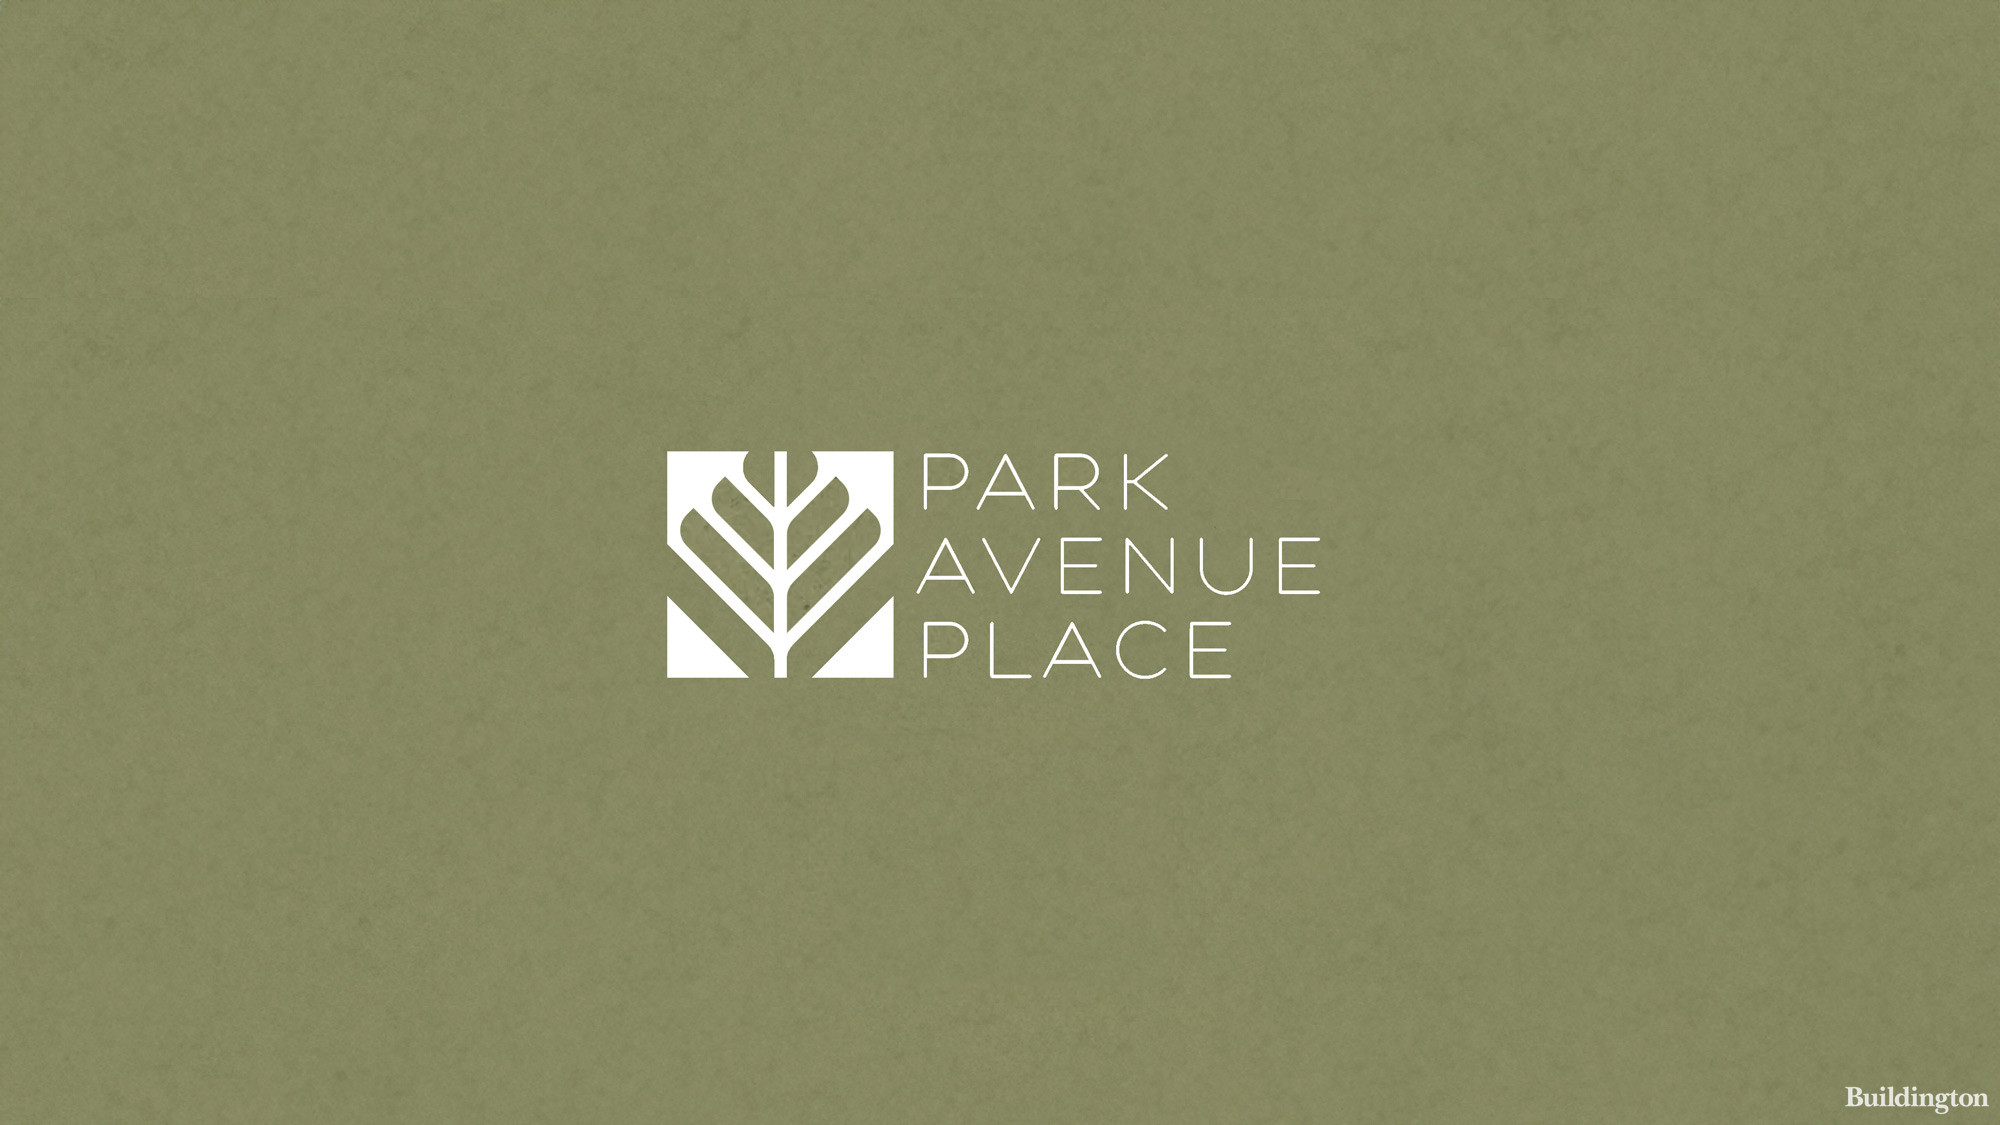 Logo cover for Park Avenue Place development in Deptford, London SE8